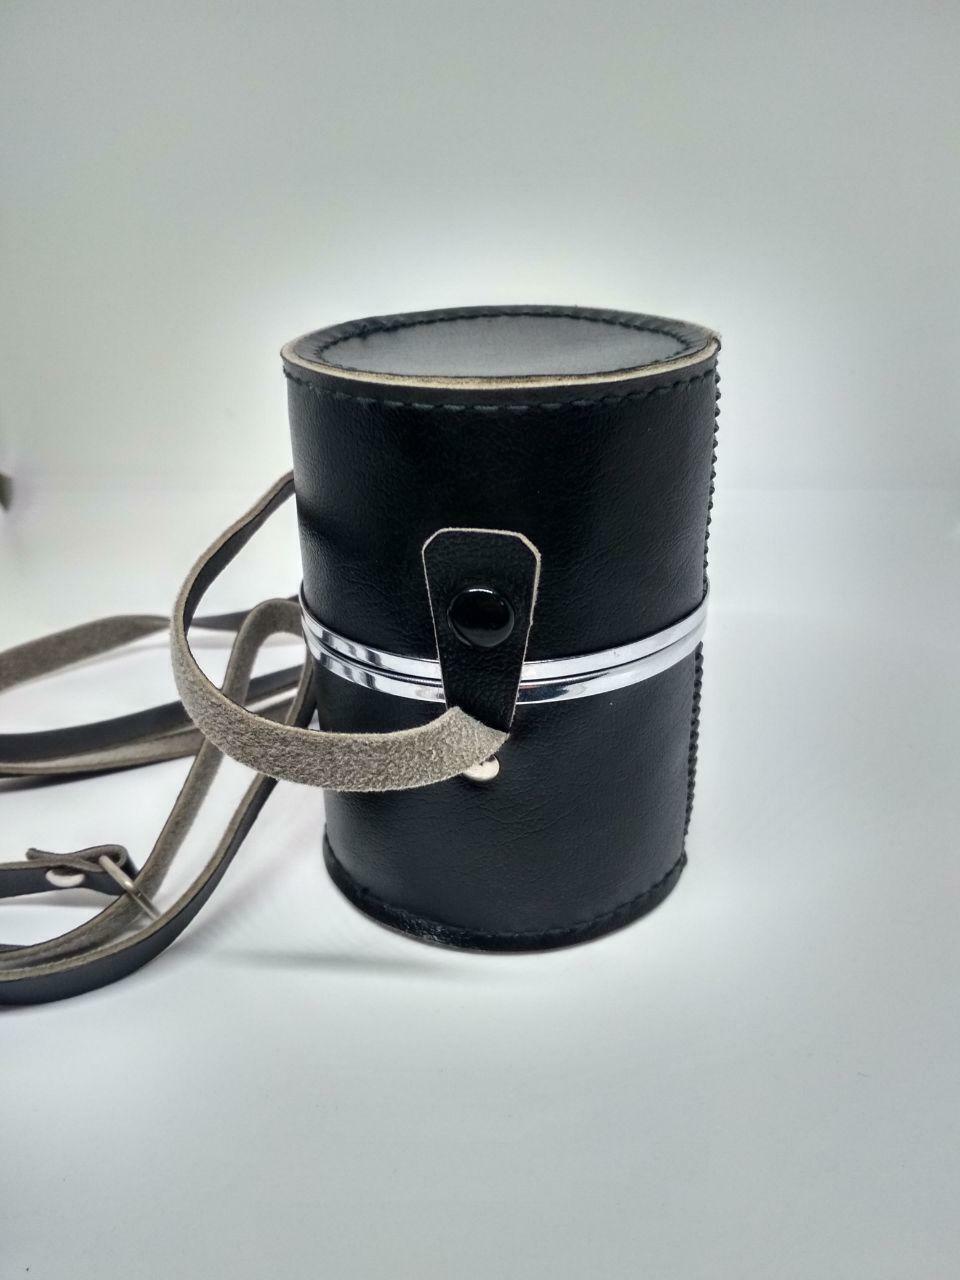 Heios-44 Original Storage Tube Box Helios Leather Case Storage Box Lens Holder